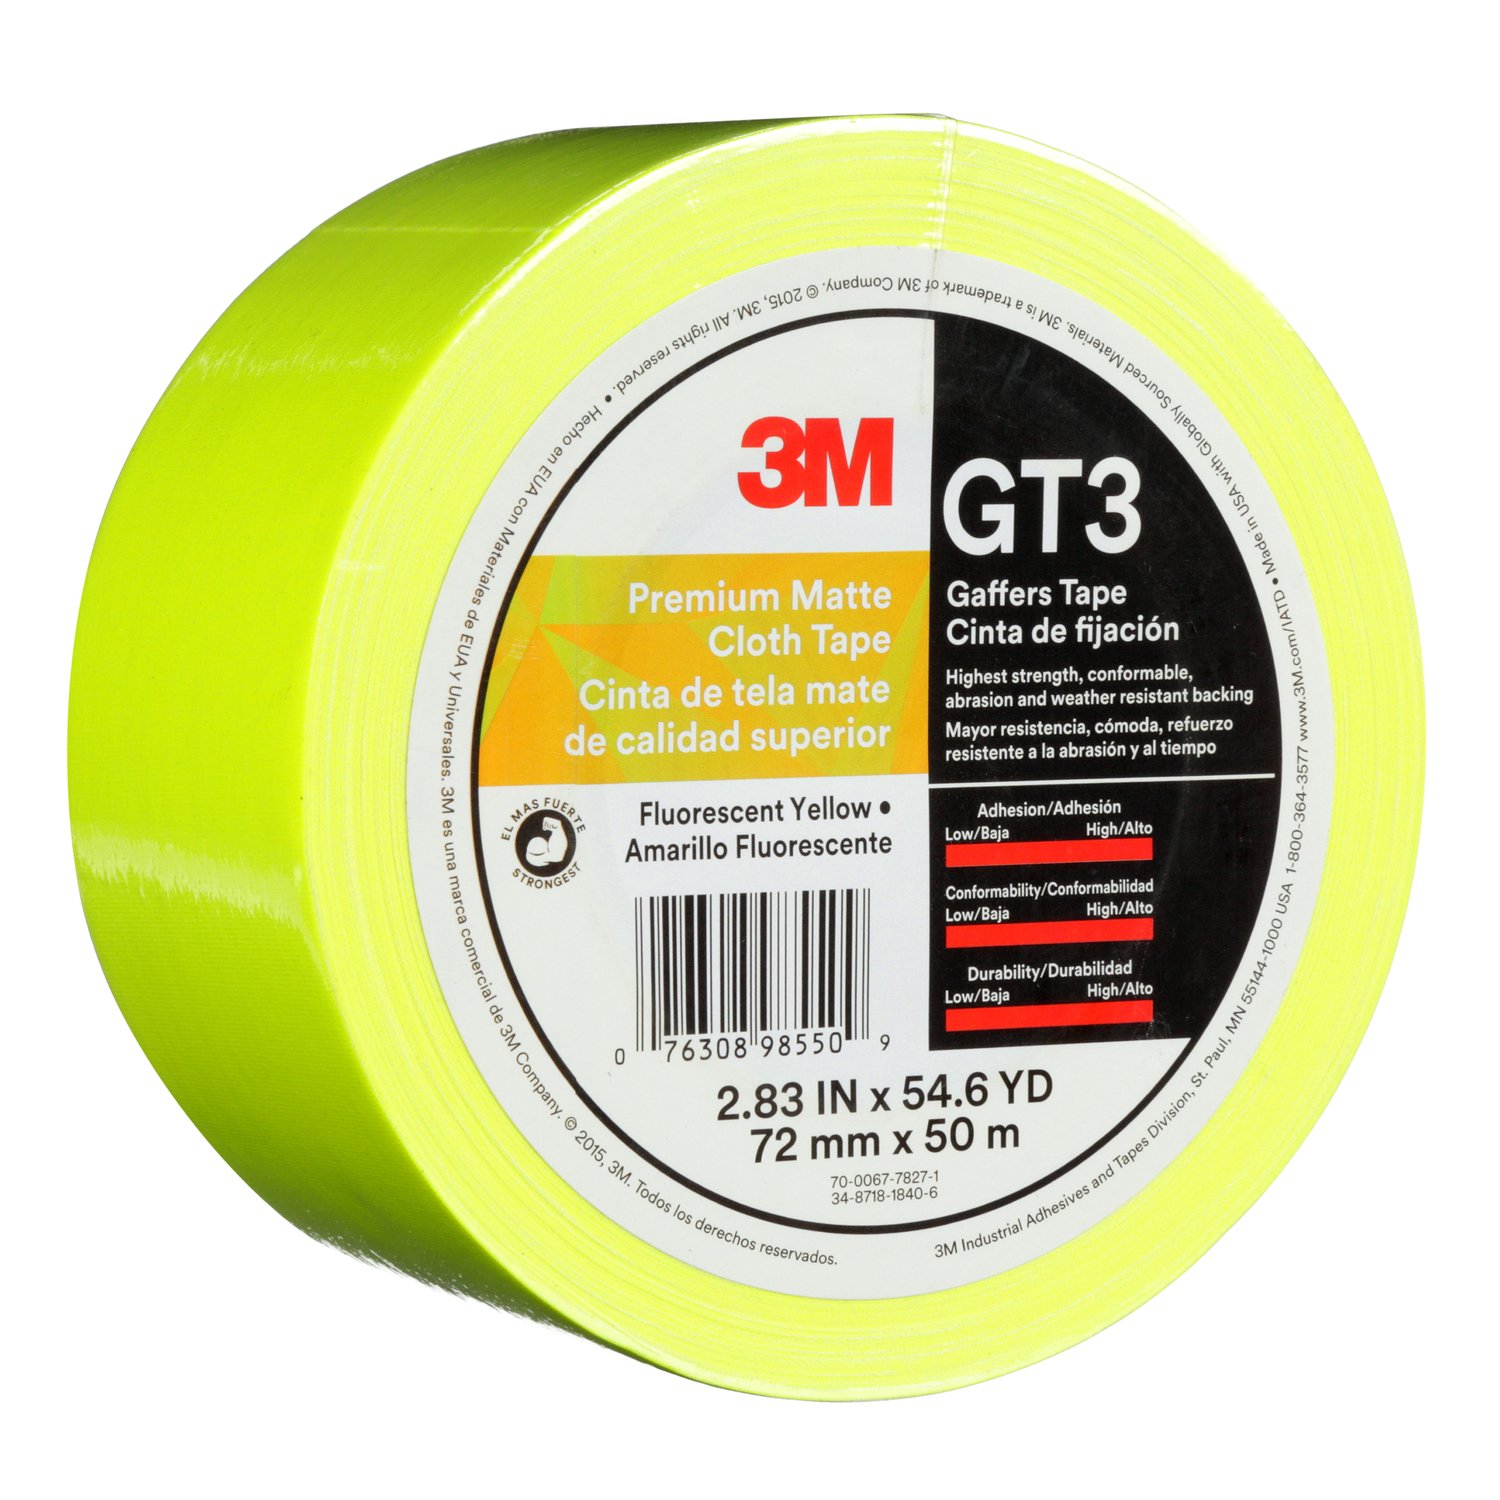 7010375530 - 3M Premium Matte Cloth (Gaffers) Tape GT3, Fluorescent Yellow, 72 mm x
50 m, 11 mil, 16/Case